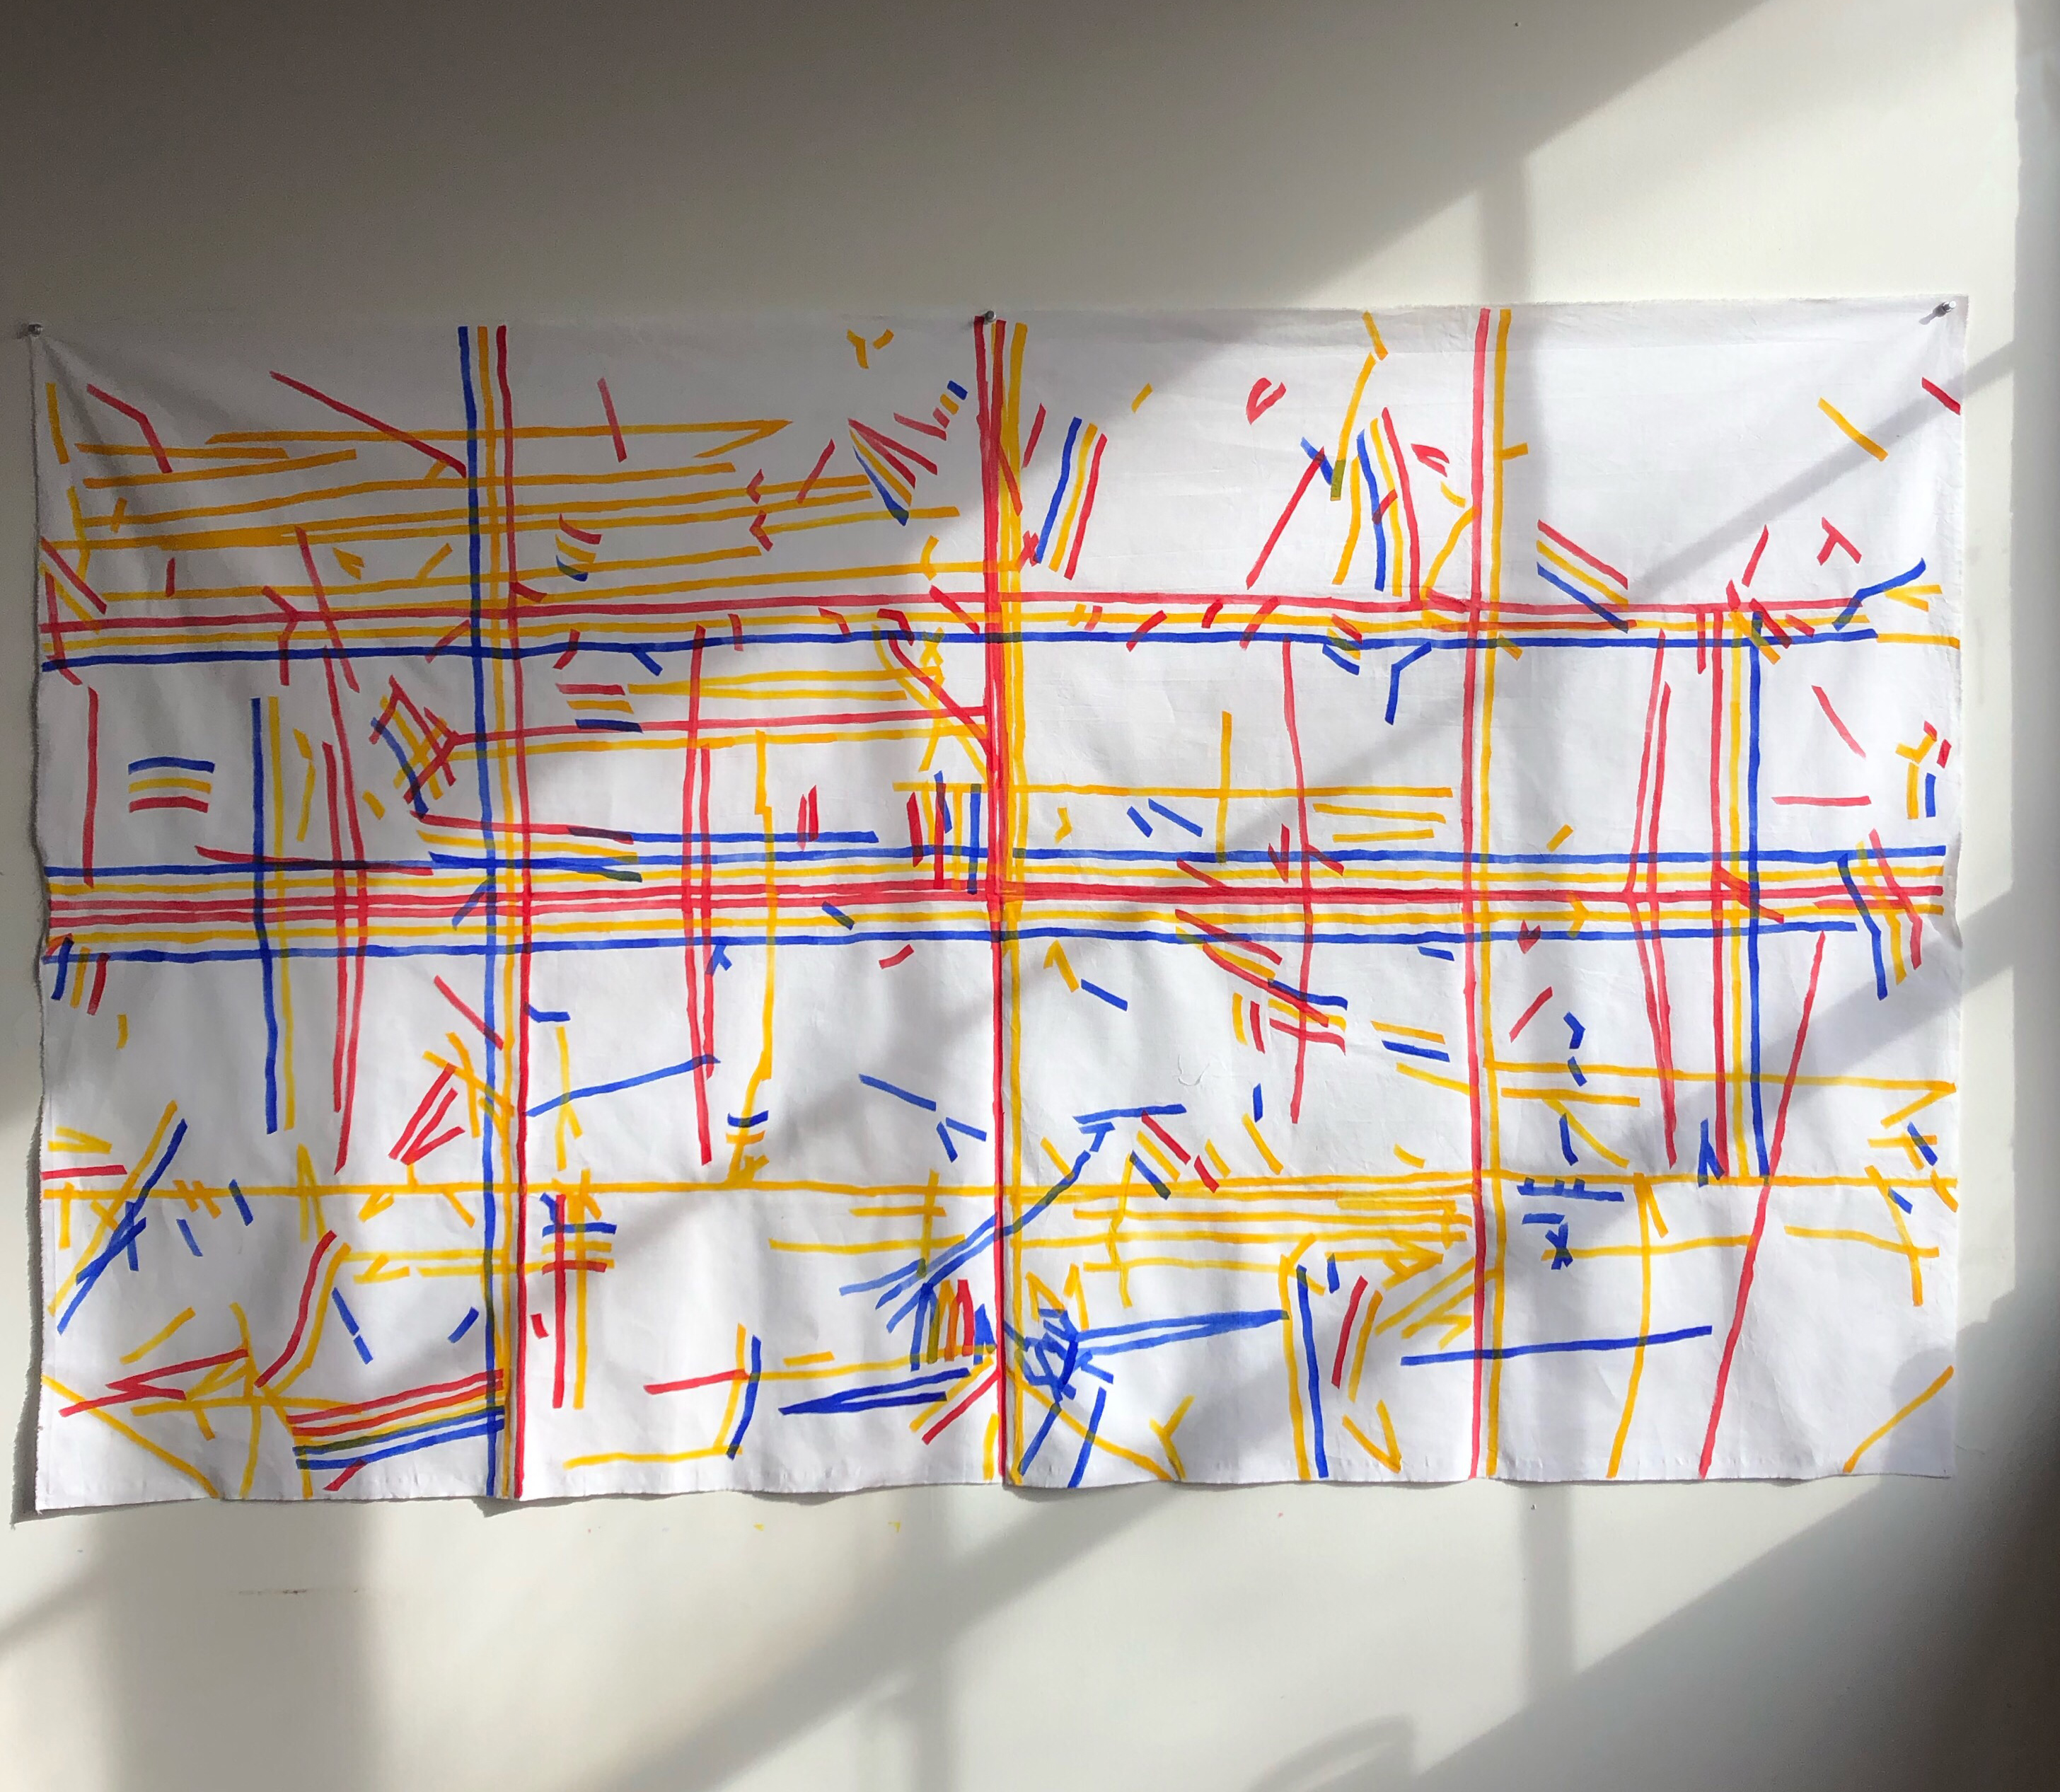 An artistically modified sheet as part of the exhibit Pliuri